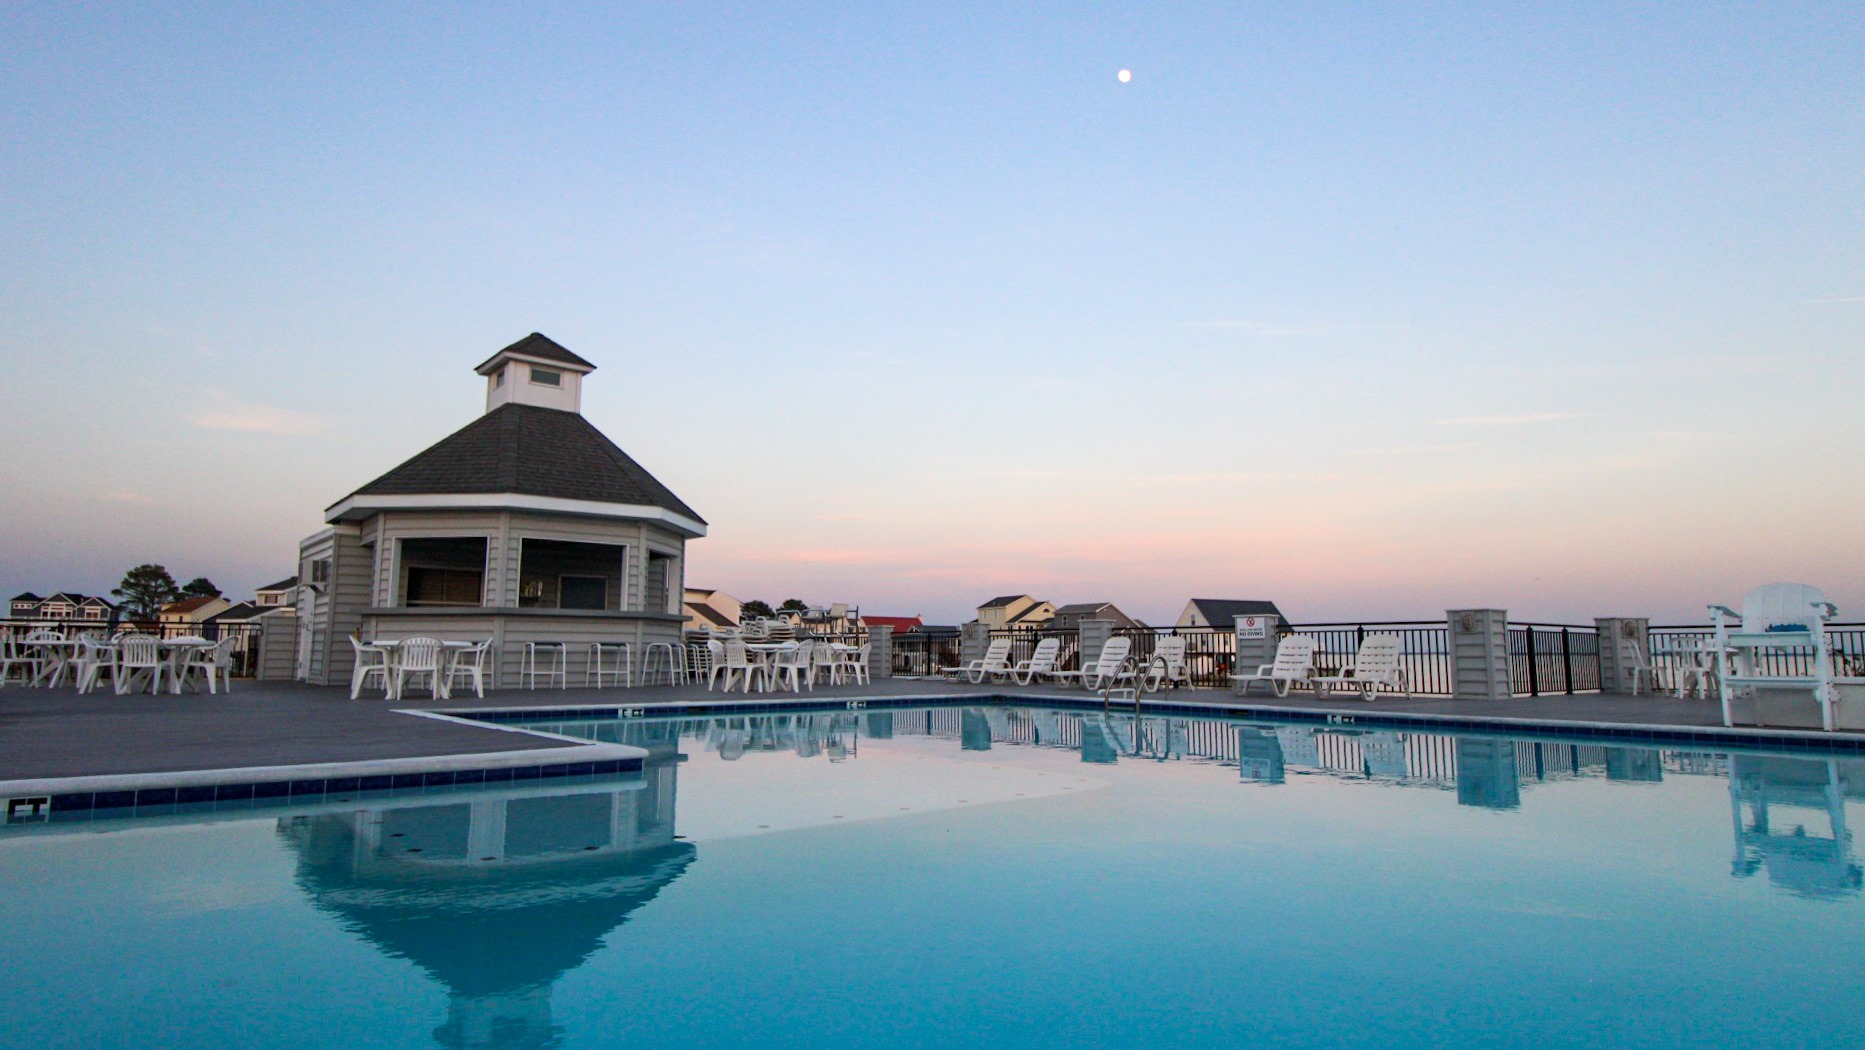 Marina Club outdoor pool and tiki bar overlooks Chincoteague Bay